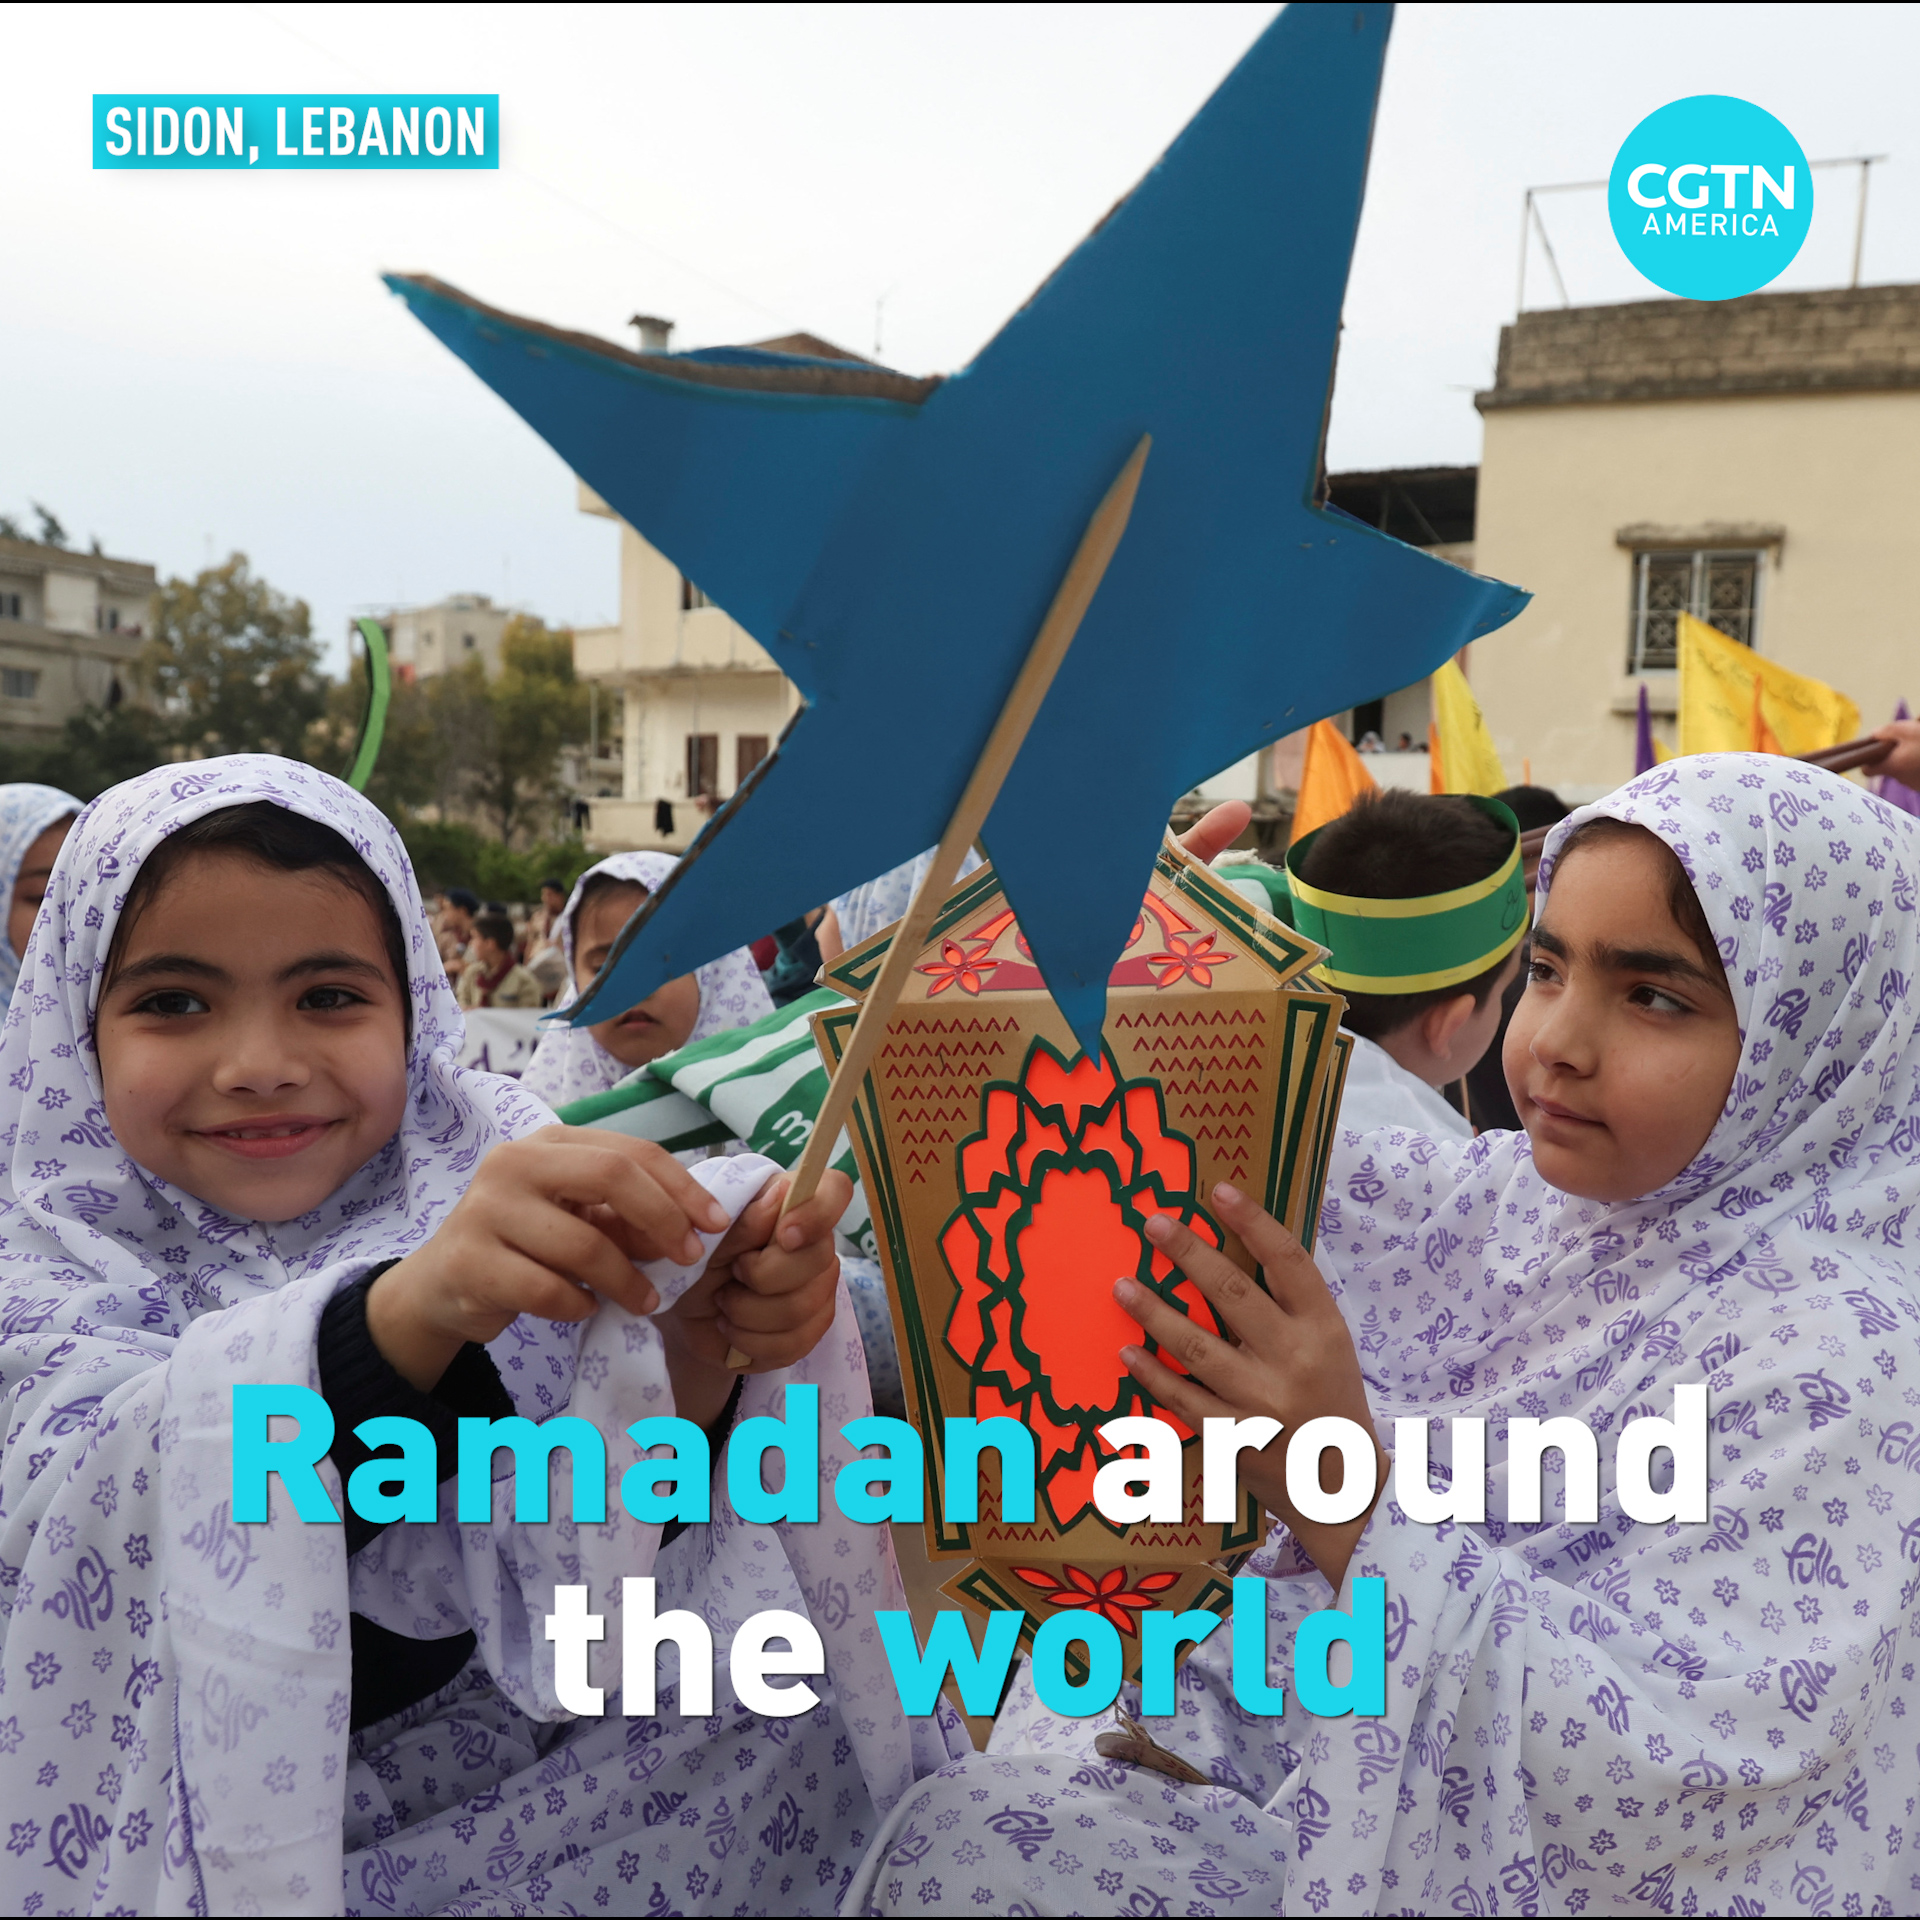 Ramadan celebrations begin around the world